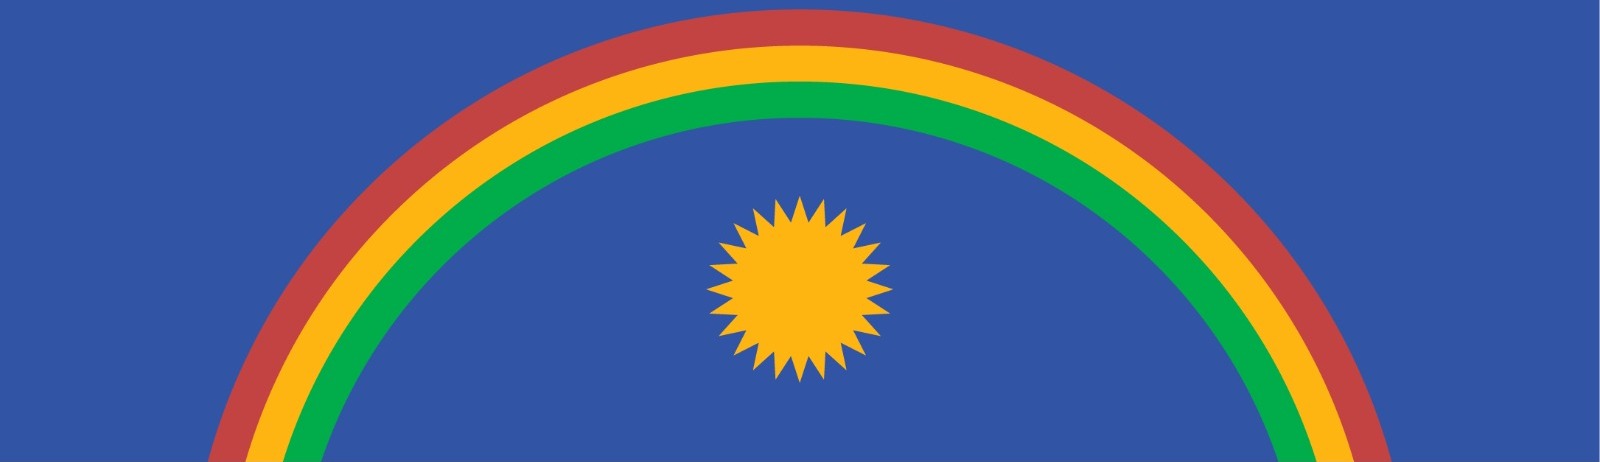 arco-iris da bandeira de pernambuco